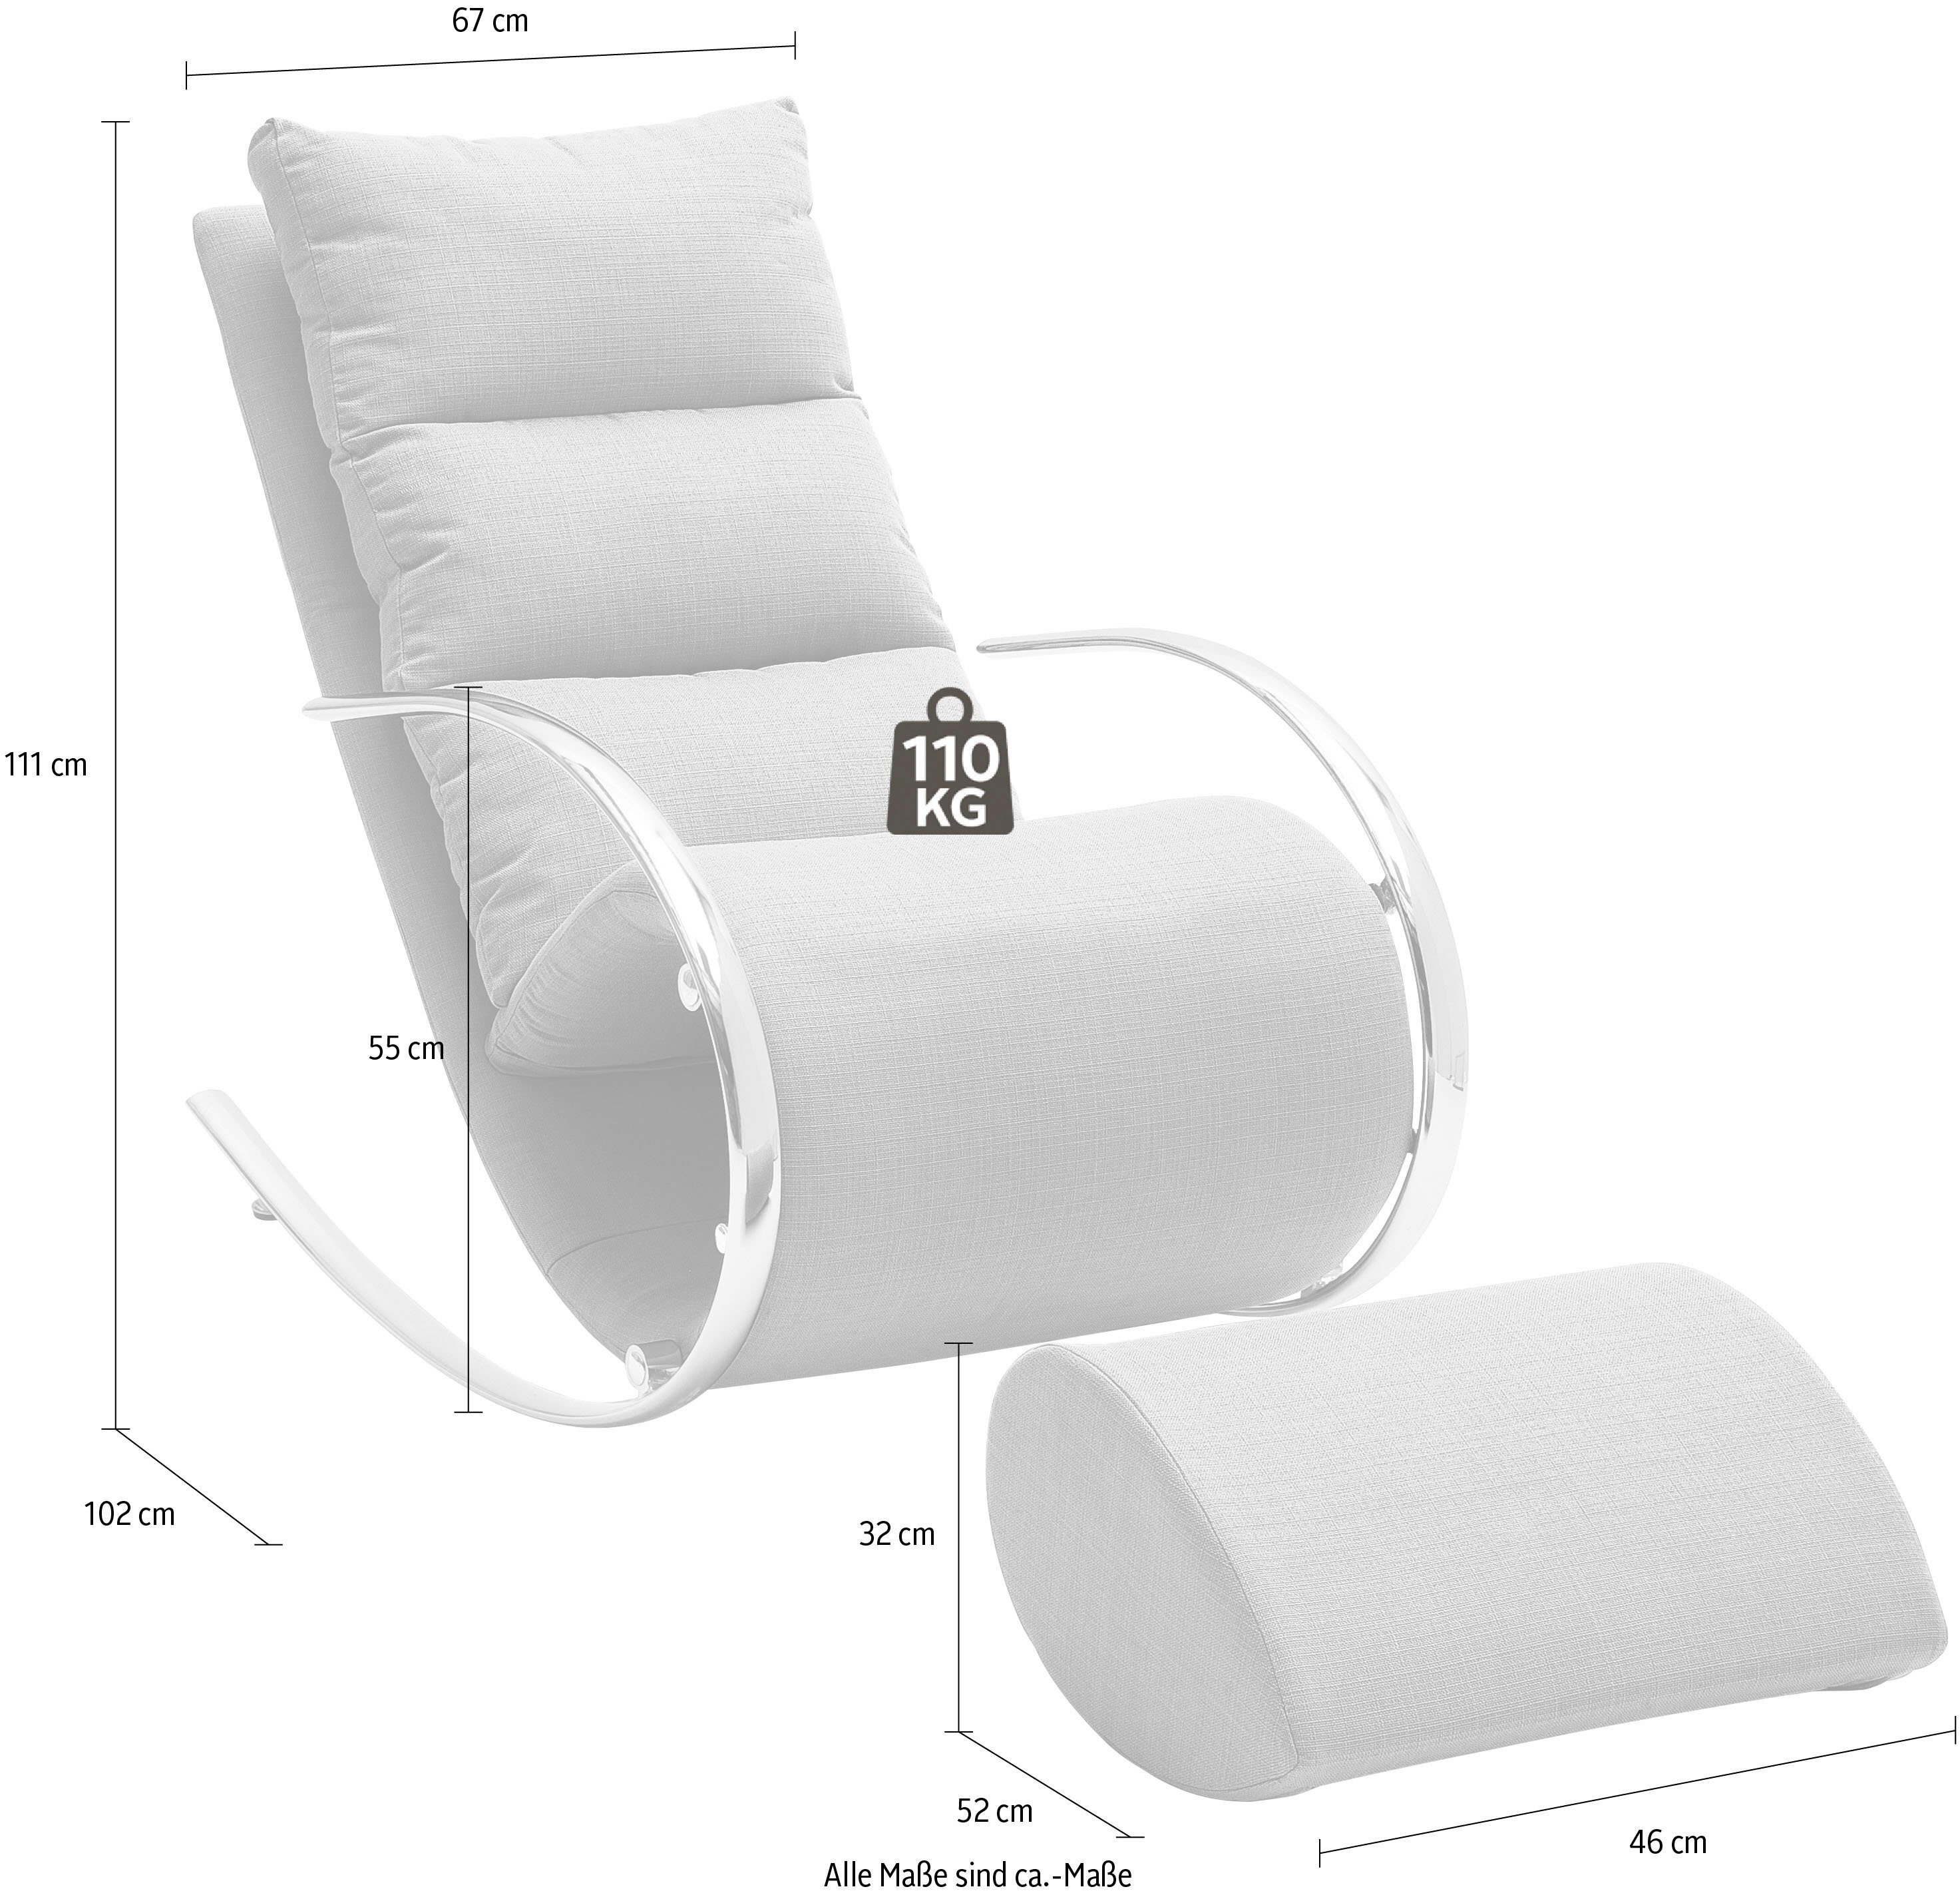 MCA furniture Relaxsessel York, Relaxsessel | kg Hocker, belastbar 100 rot mit bis rot